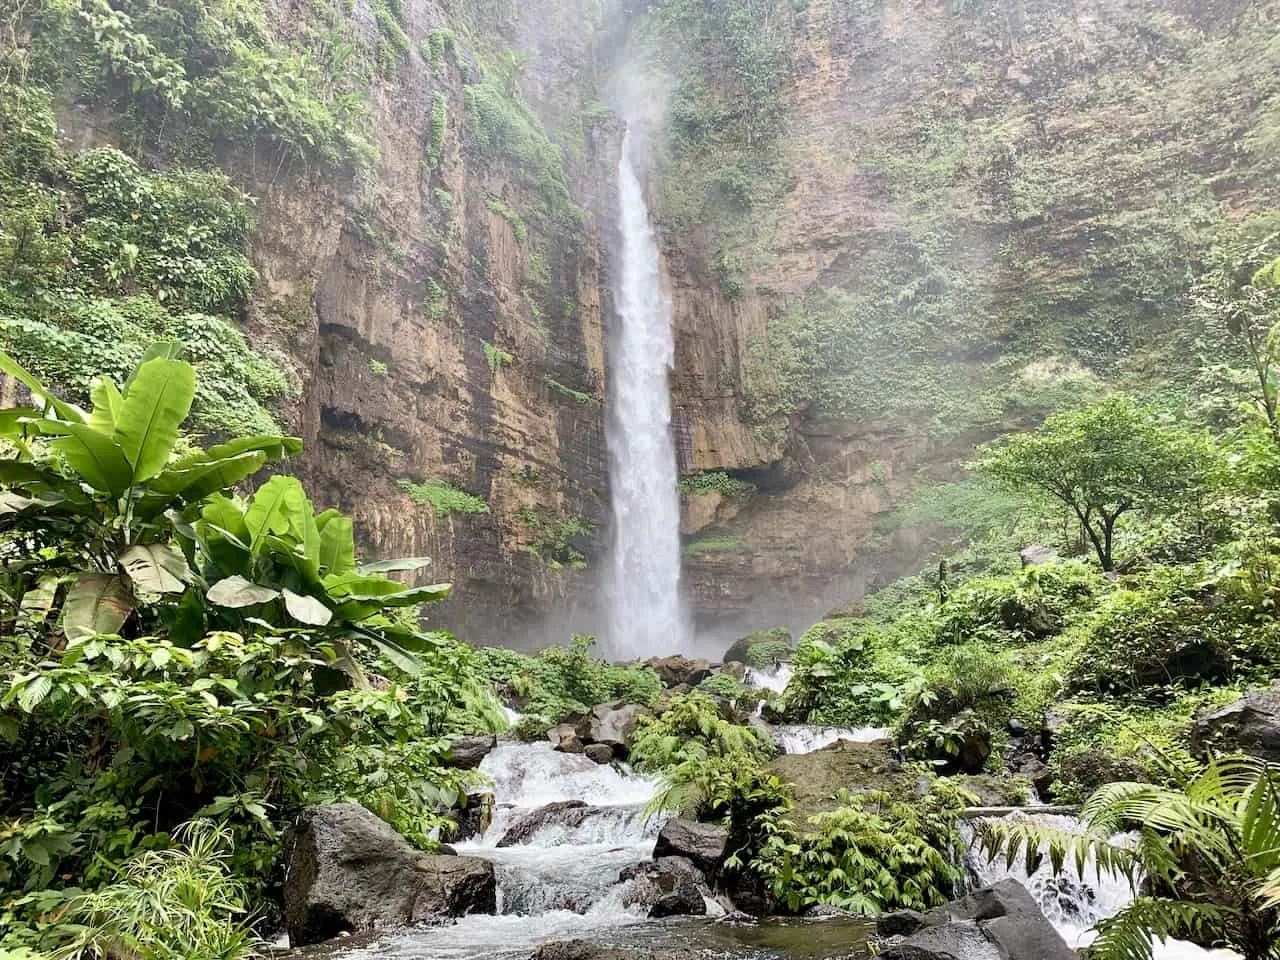 Air Terjun Kapas Biru Waterfall